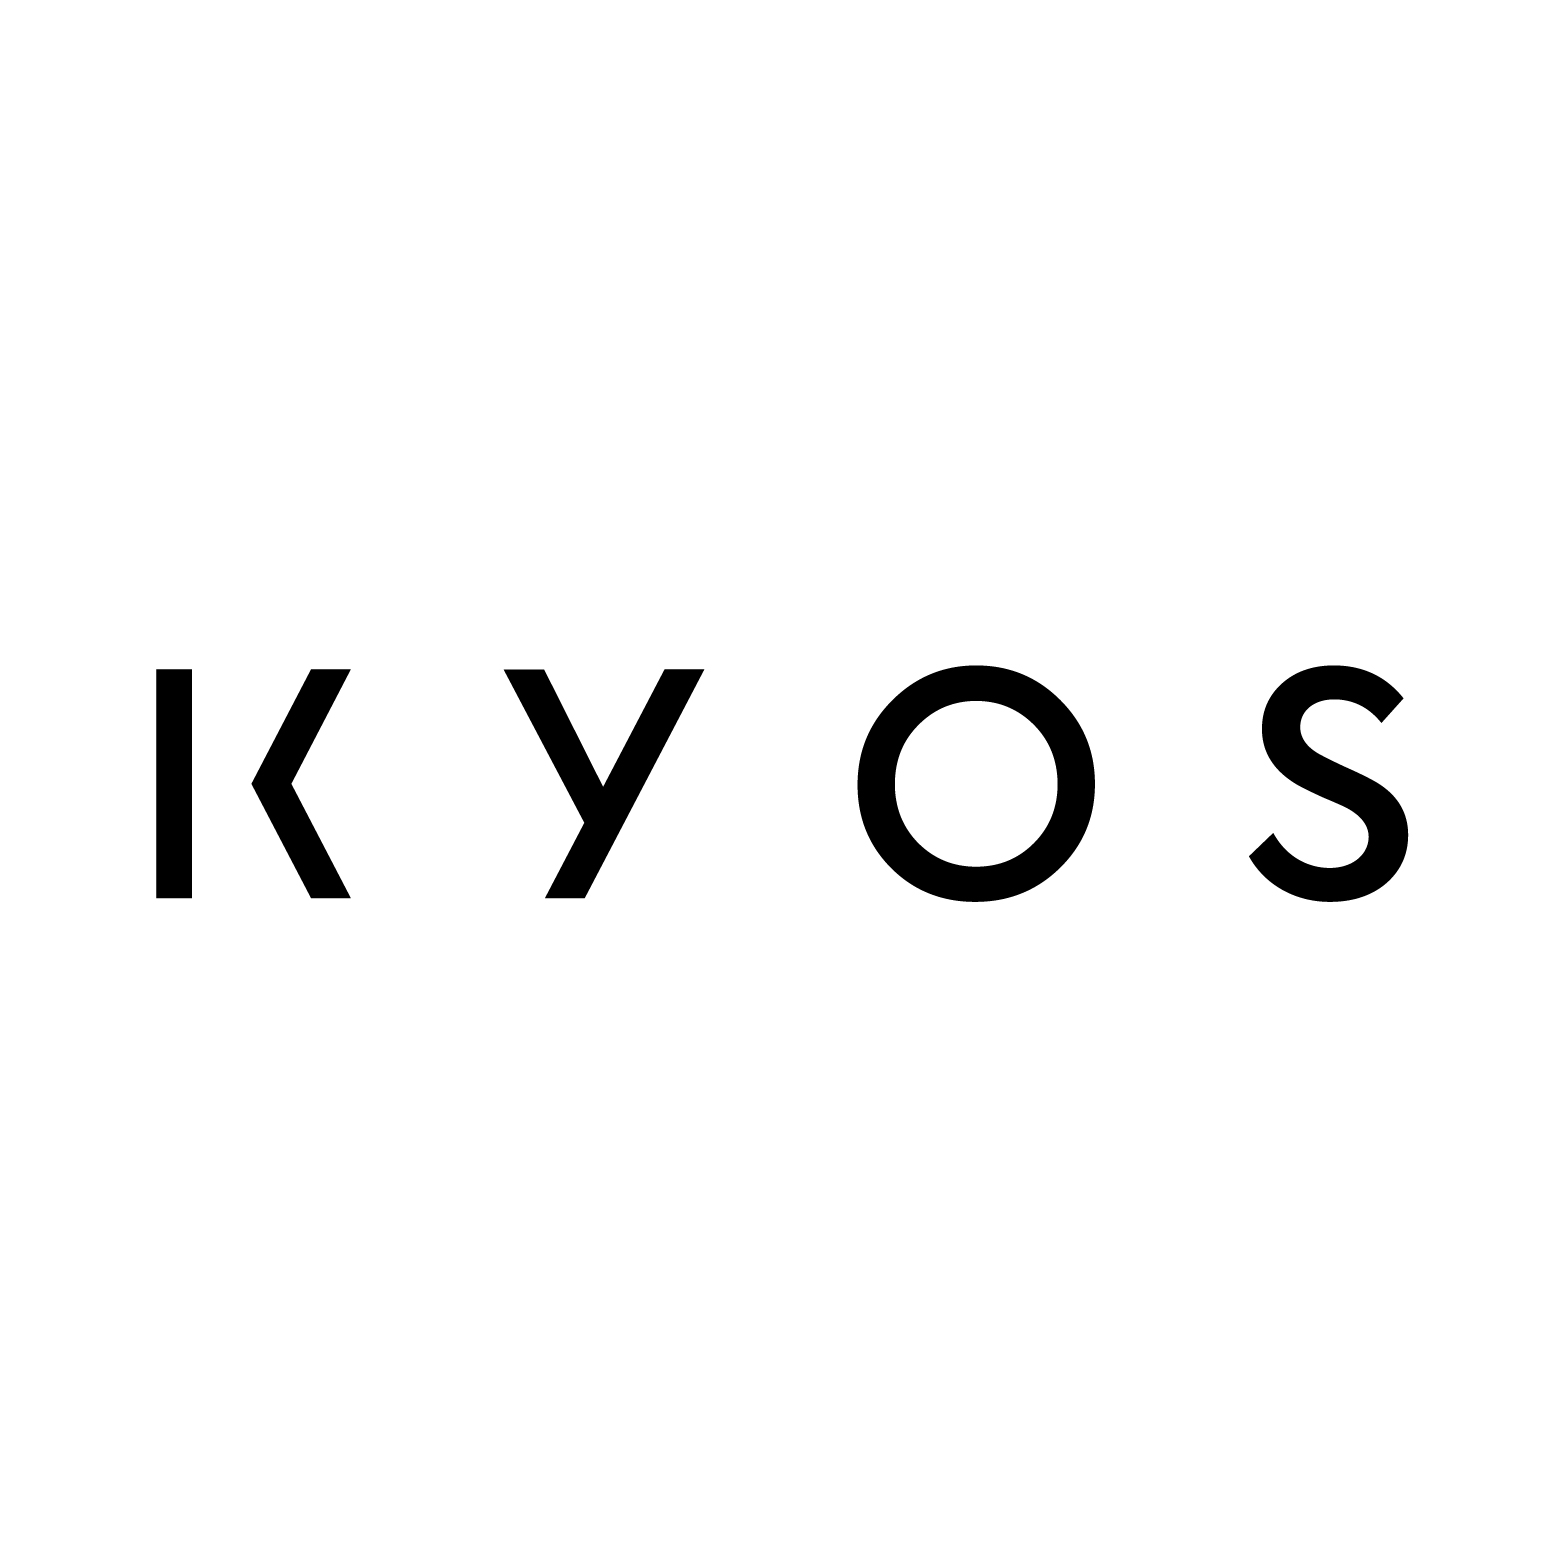 Kyos_Q-modified